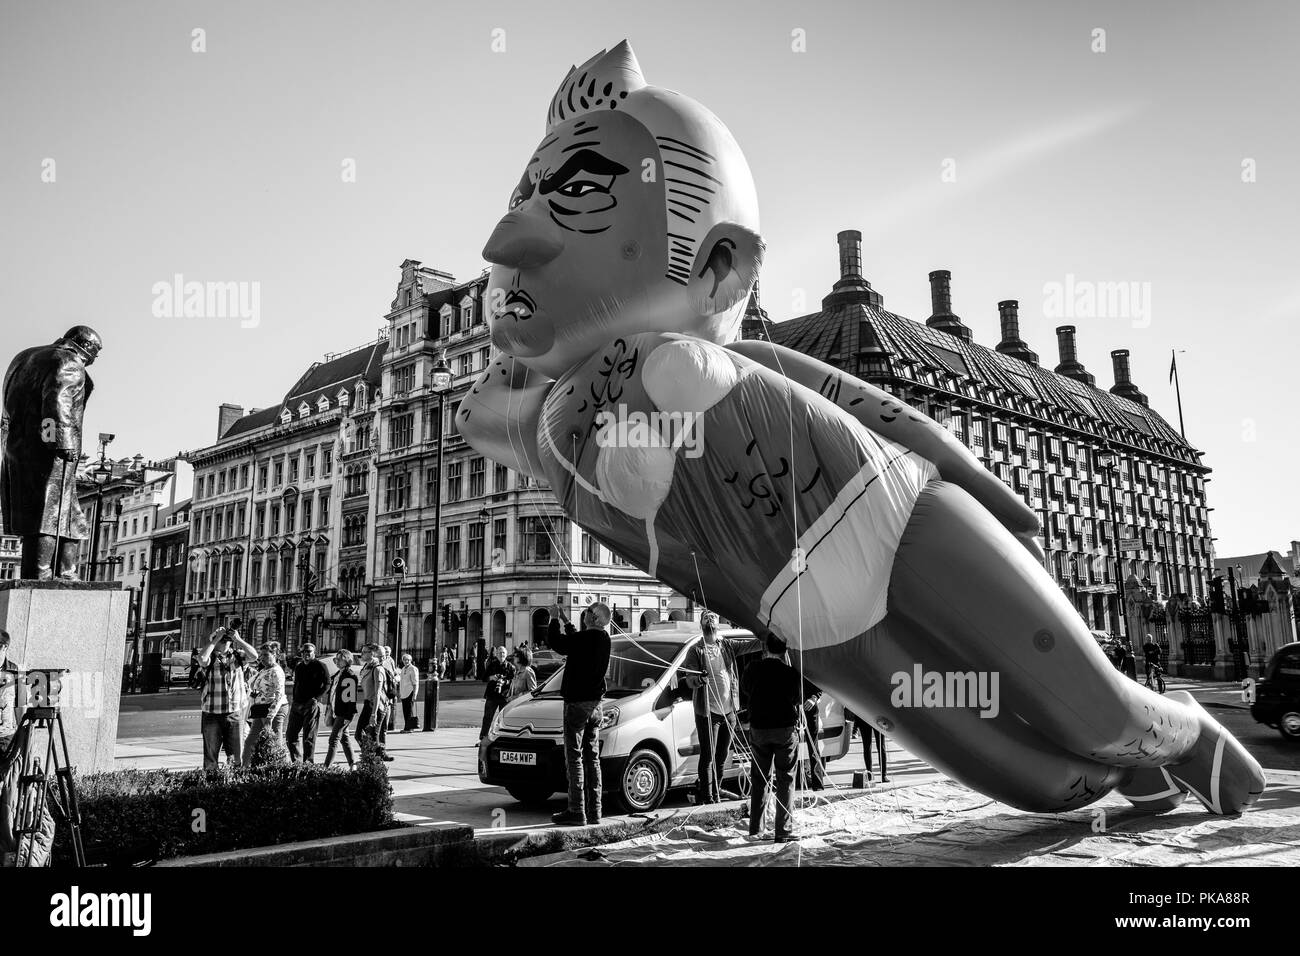 Protesters Fly a 29ft Long Bikini-Clad Blimp of London Mayor Sadiq Khan Over Parliament Square, London, UK Stock Photo